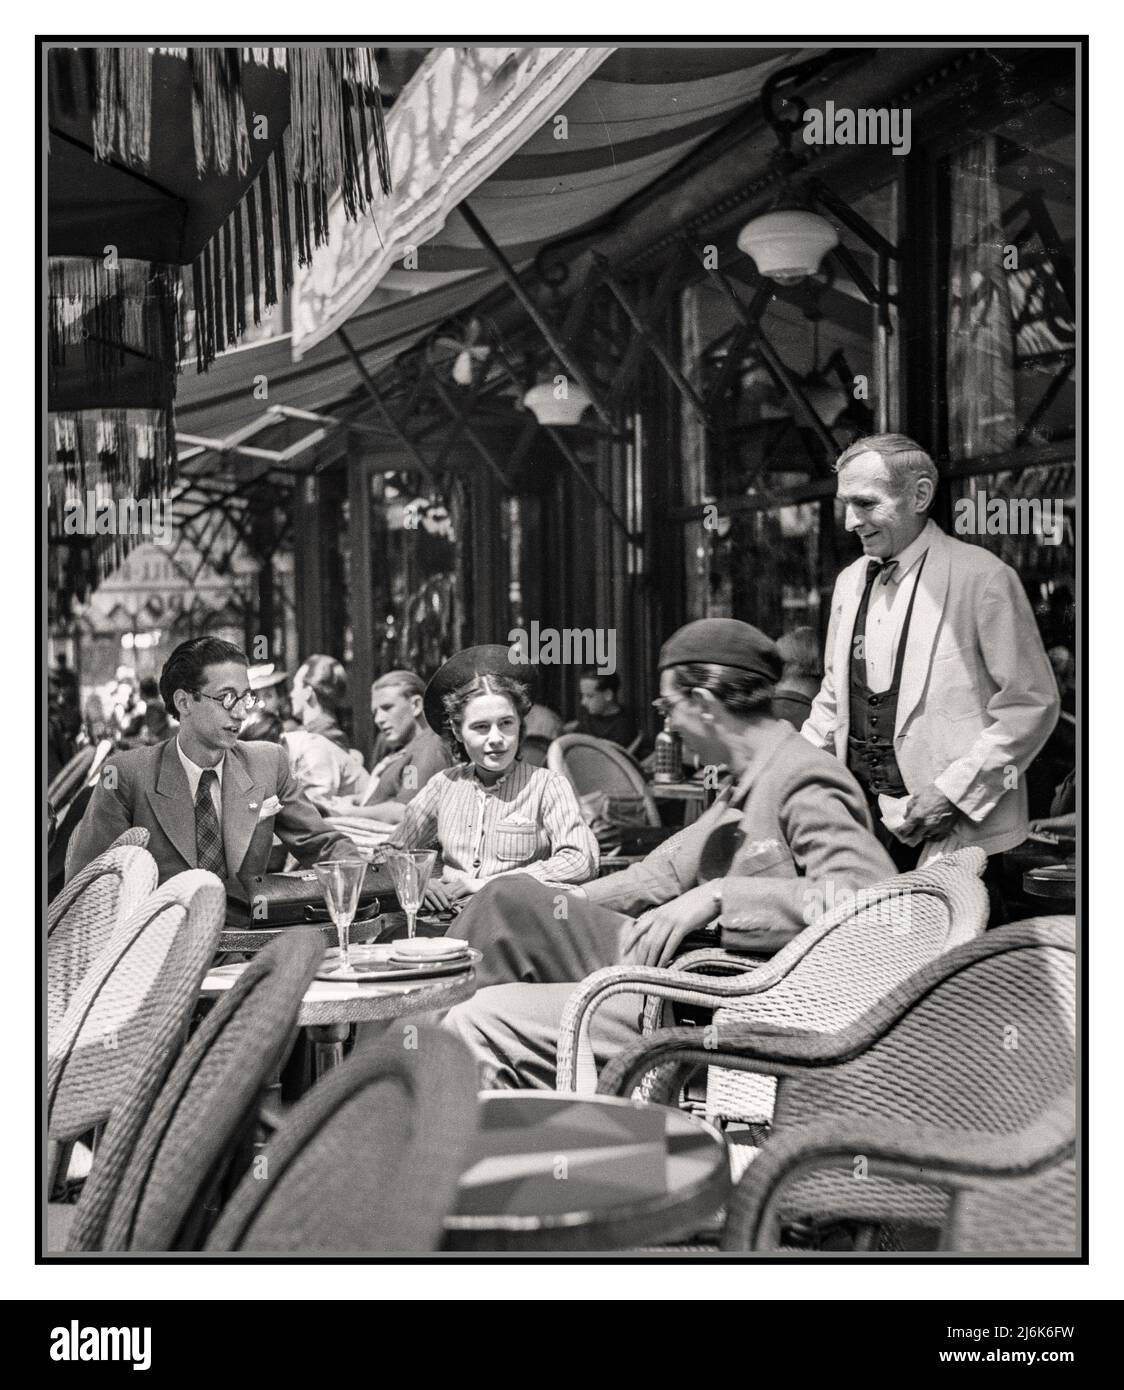 PARIS CAFE RETRO 1940s Post WW2 War freedom optimism with students